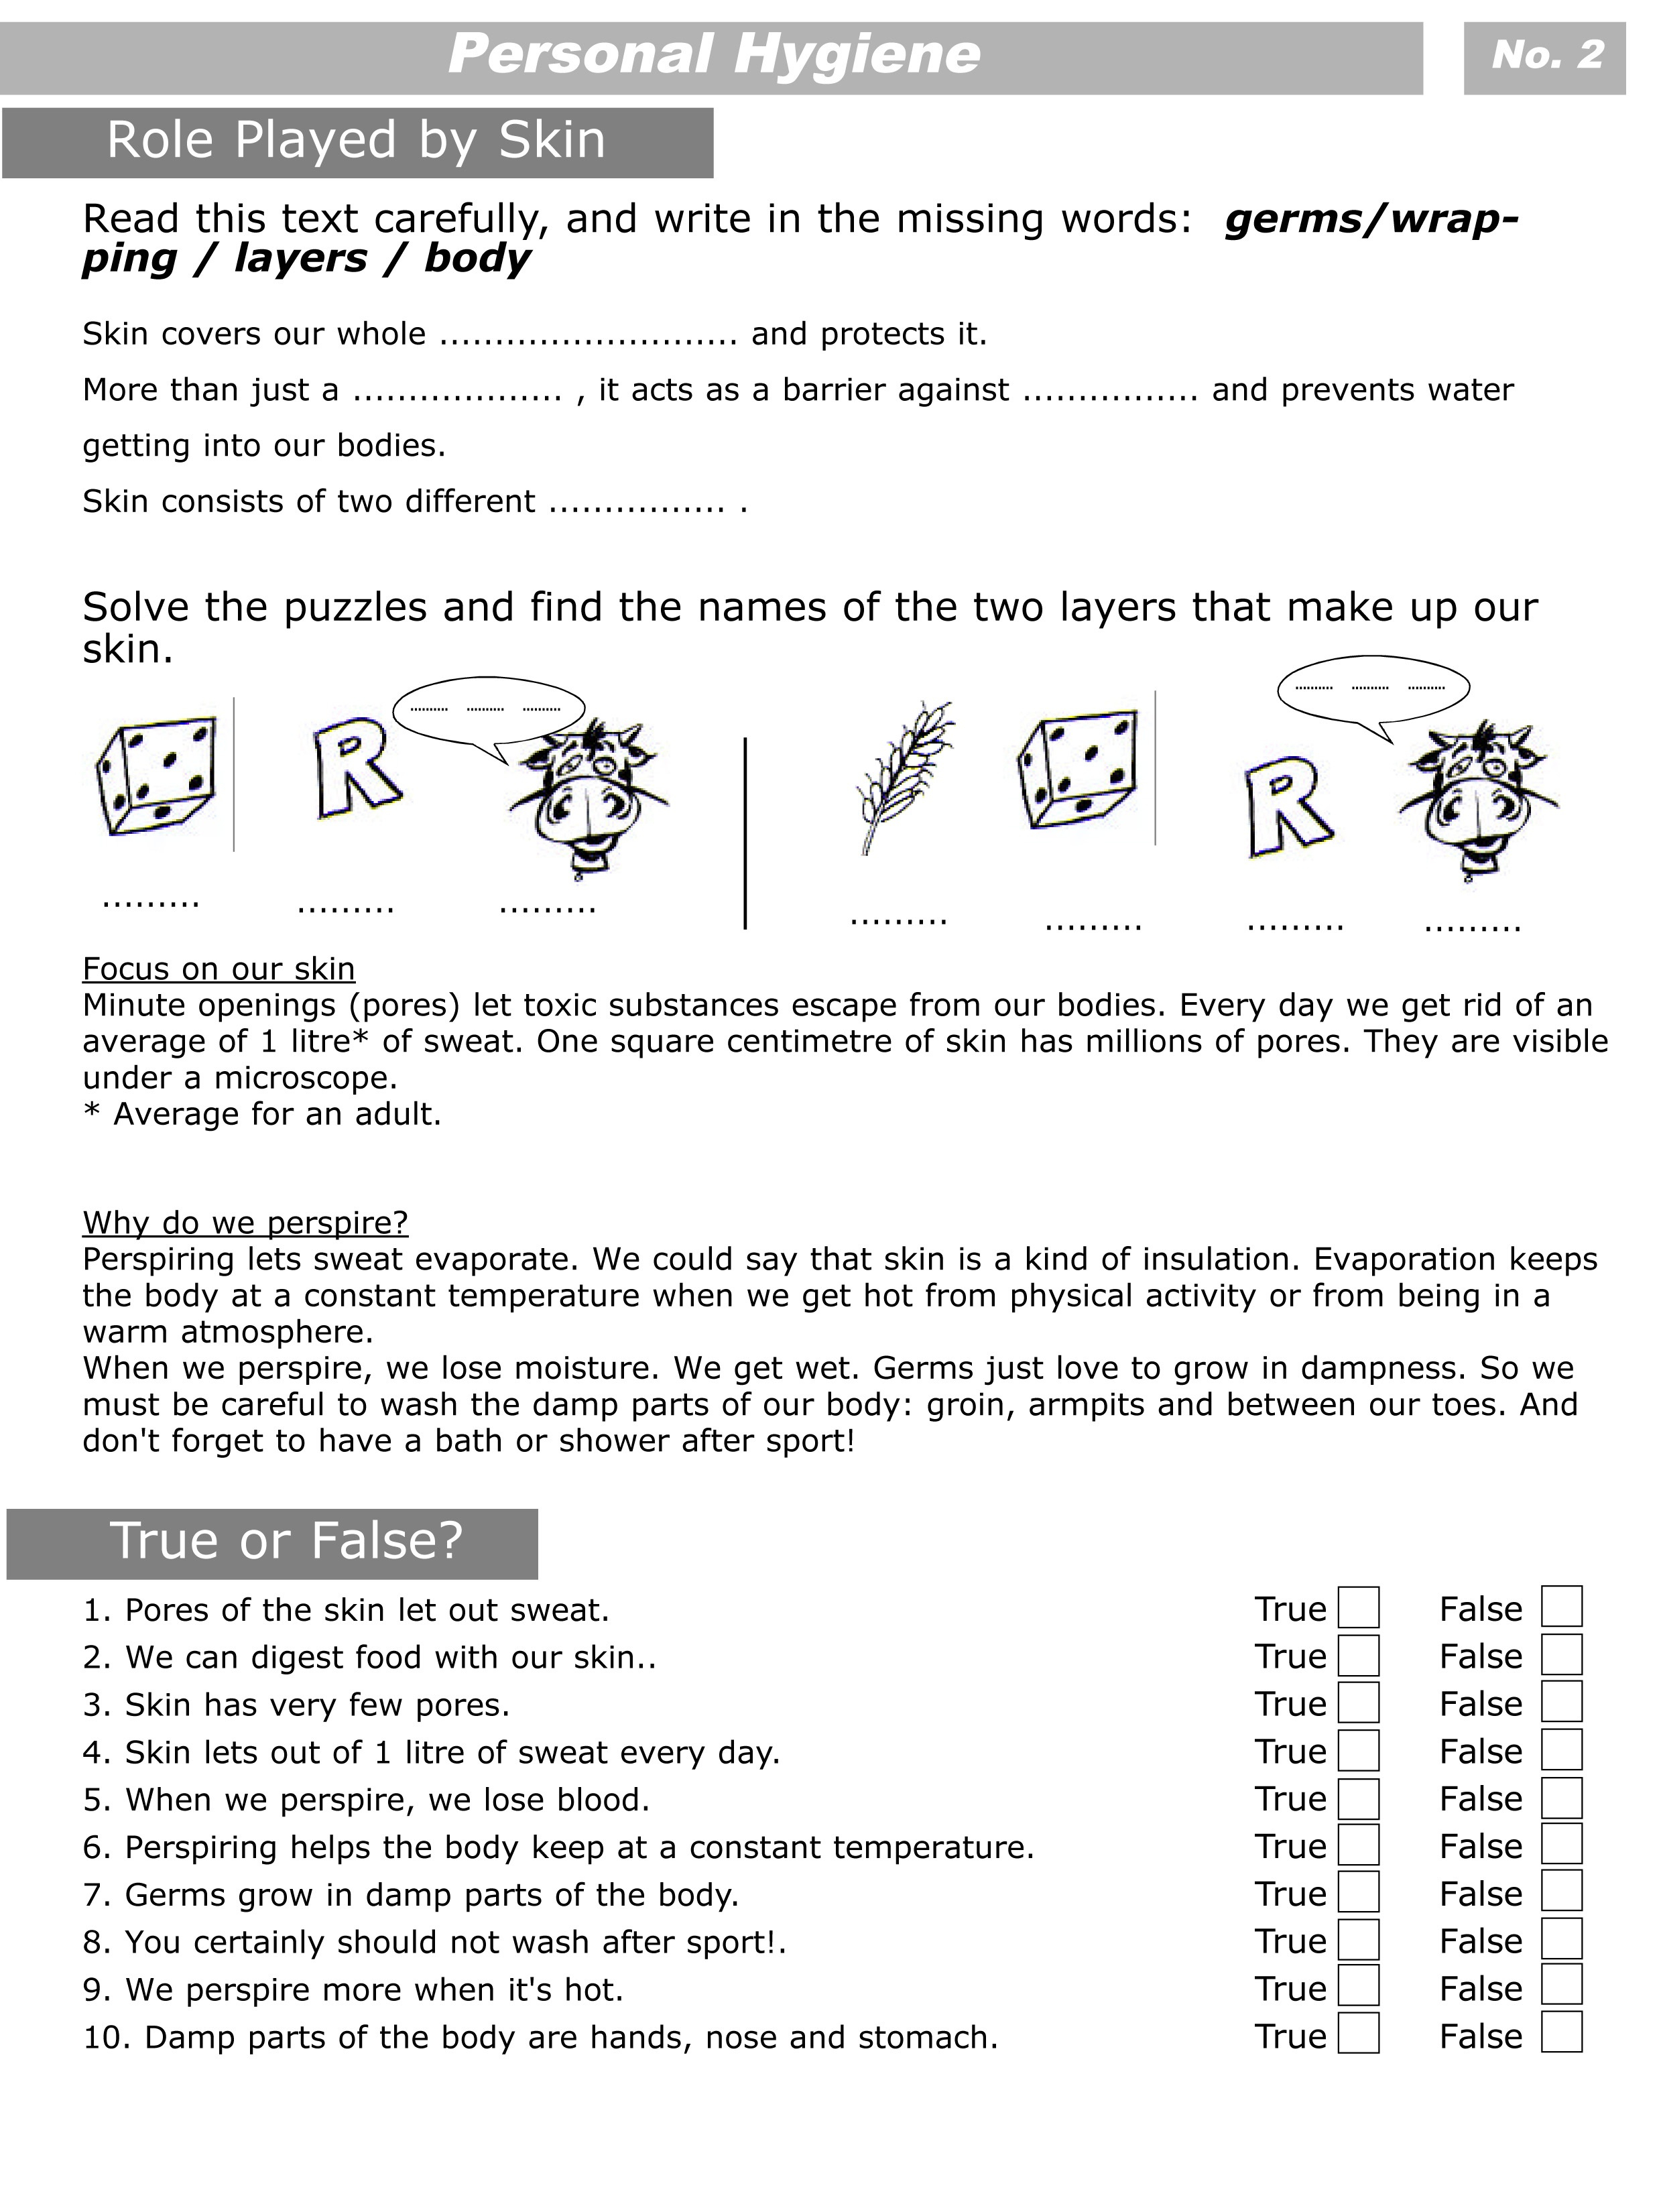 Personal Hygiene Worksheets For Kids Level 2 | Personal Hygiene | Personal Hygiene Activities Worksheets Printable